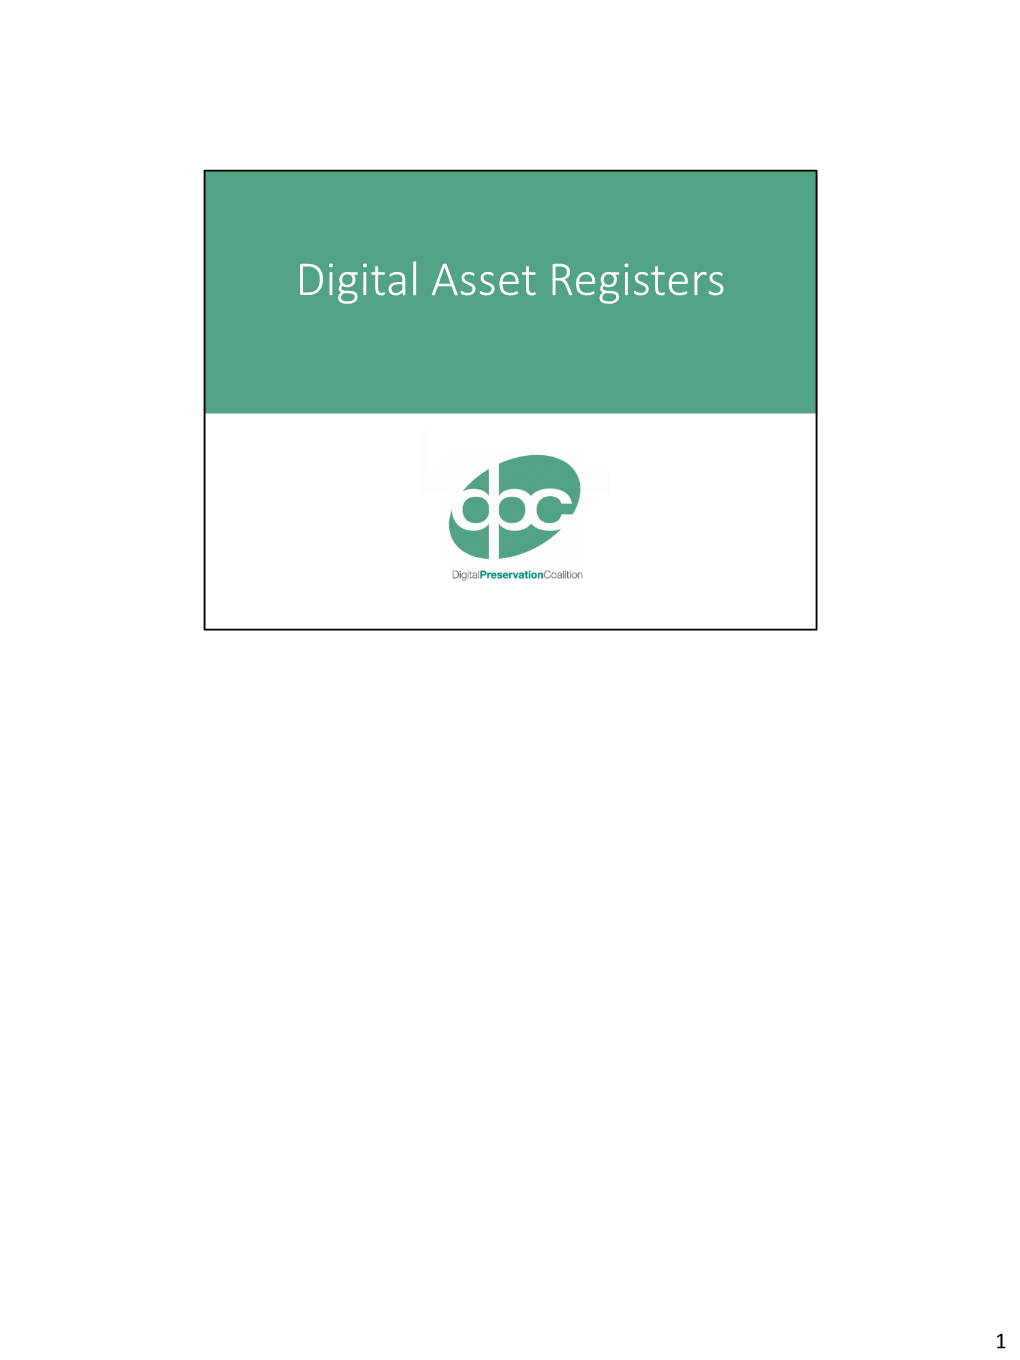 Creating a Digital Asset Register